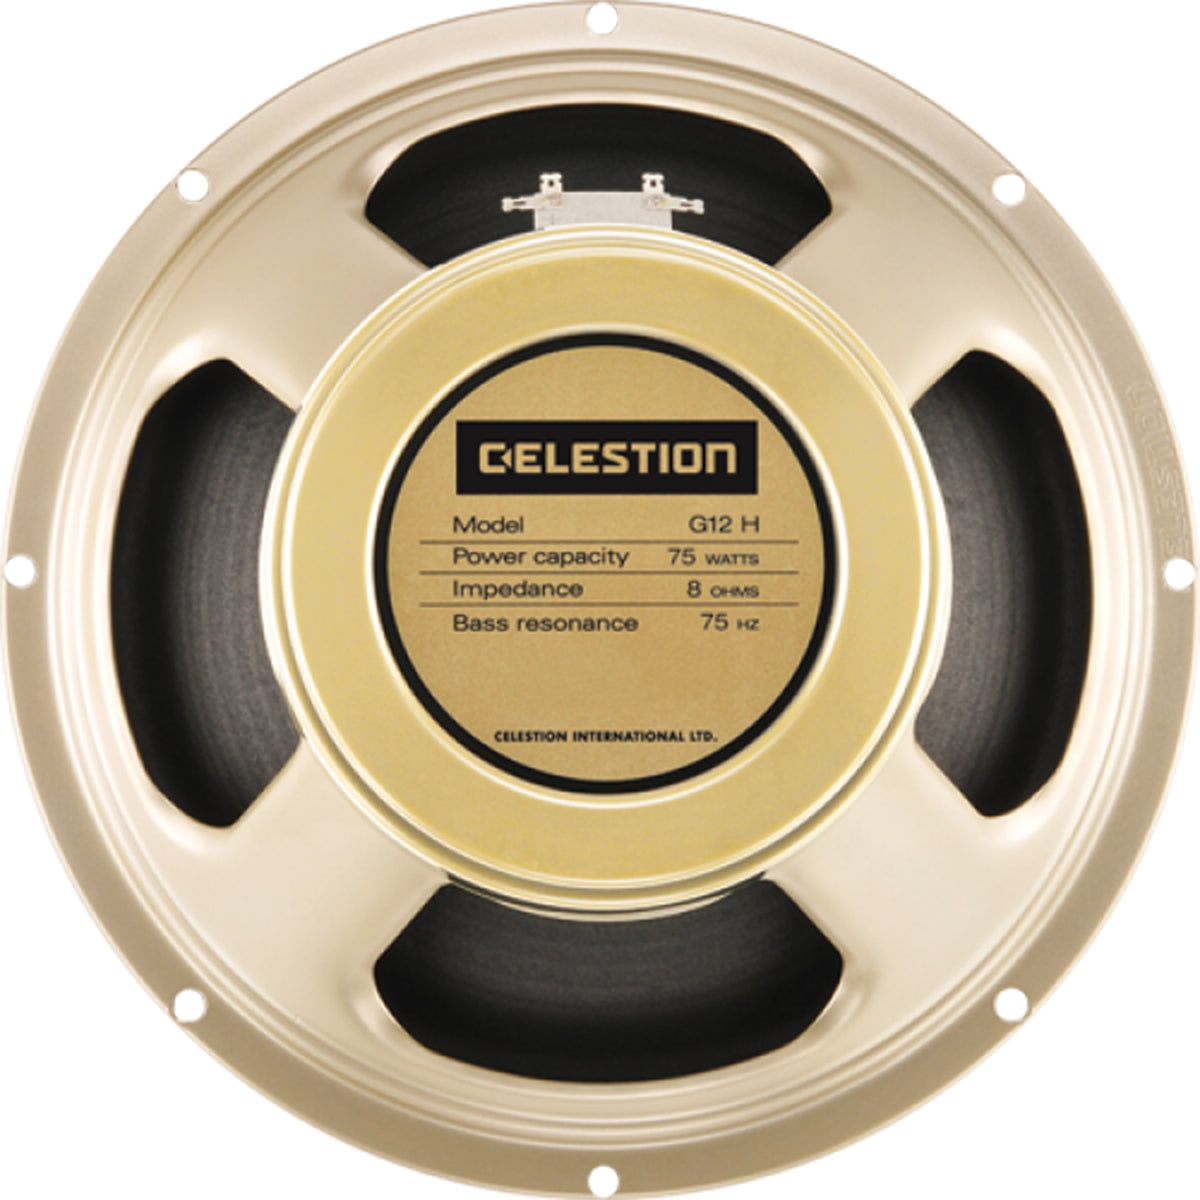 Celestion T5890 Classic Series G12H 75 Creamback Guitar Speaker 12 Inch 75W 8OHM